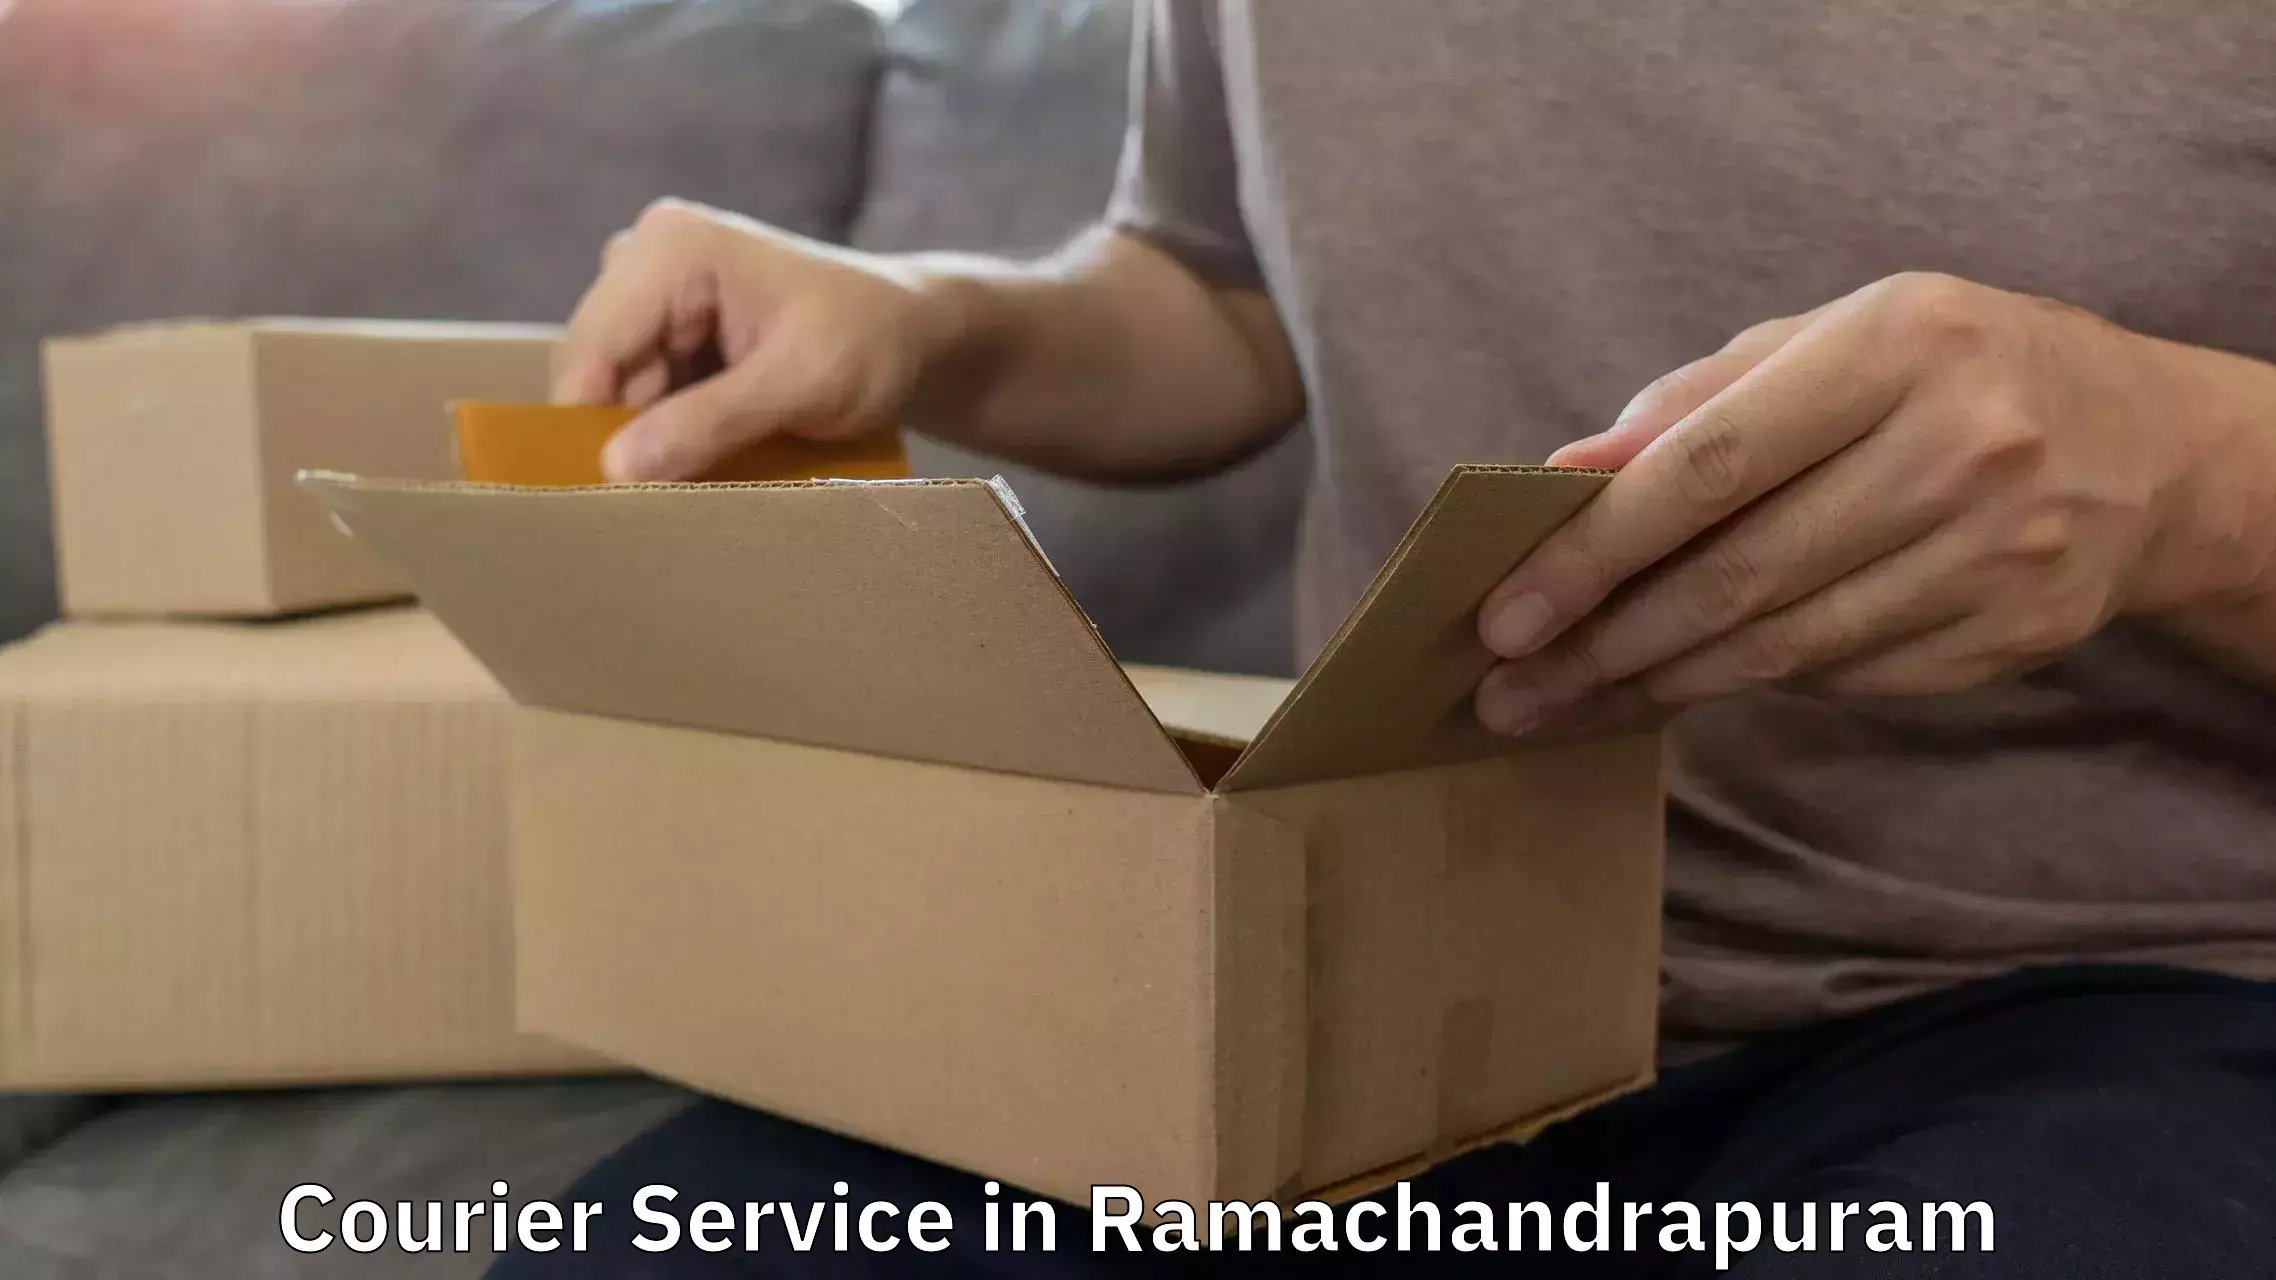 Multi-national courier services in Ramachandrapuram